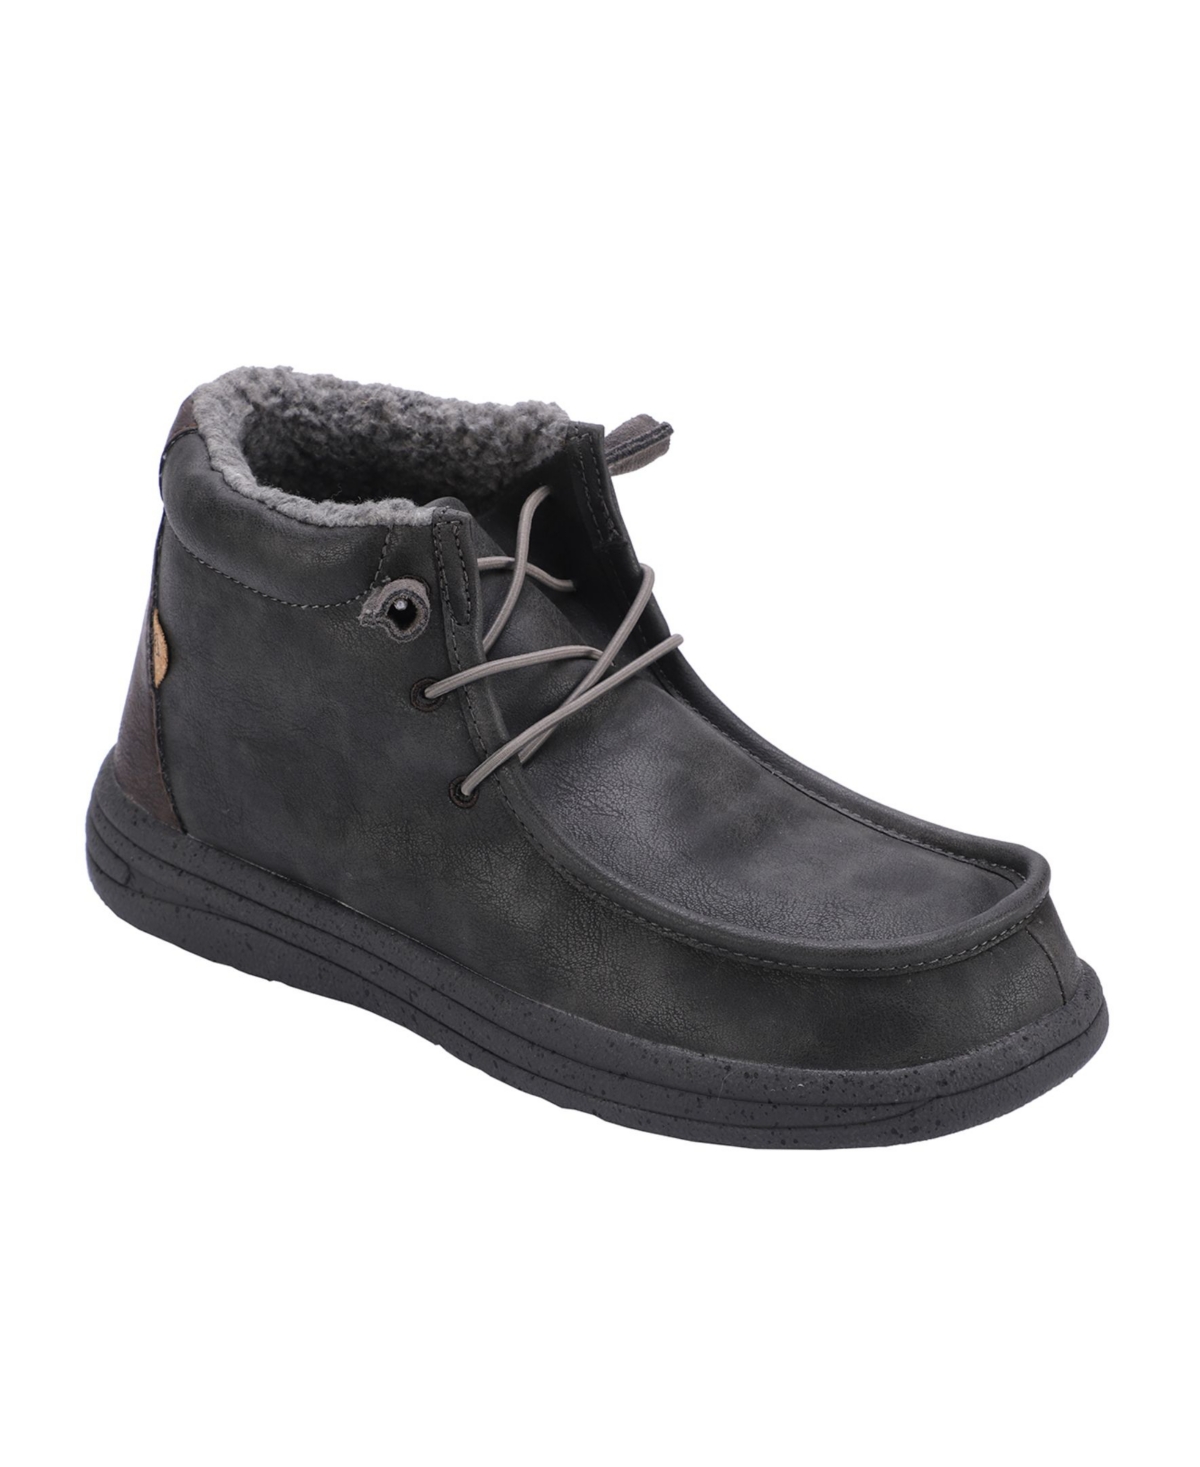 Lamo Men's Trent Chukka Boots Men's Shoes